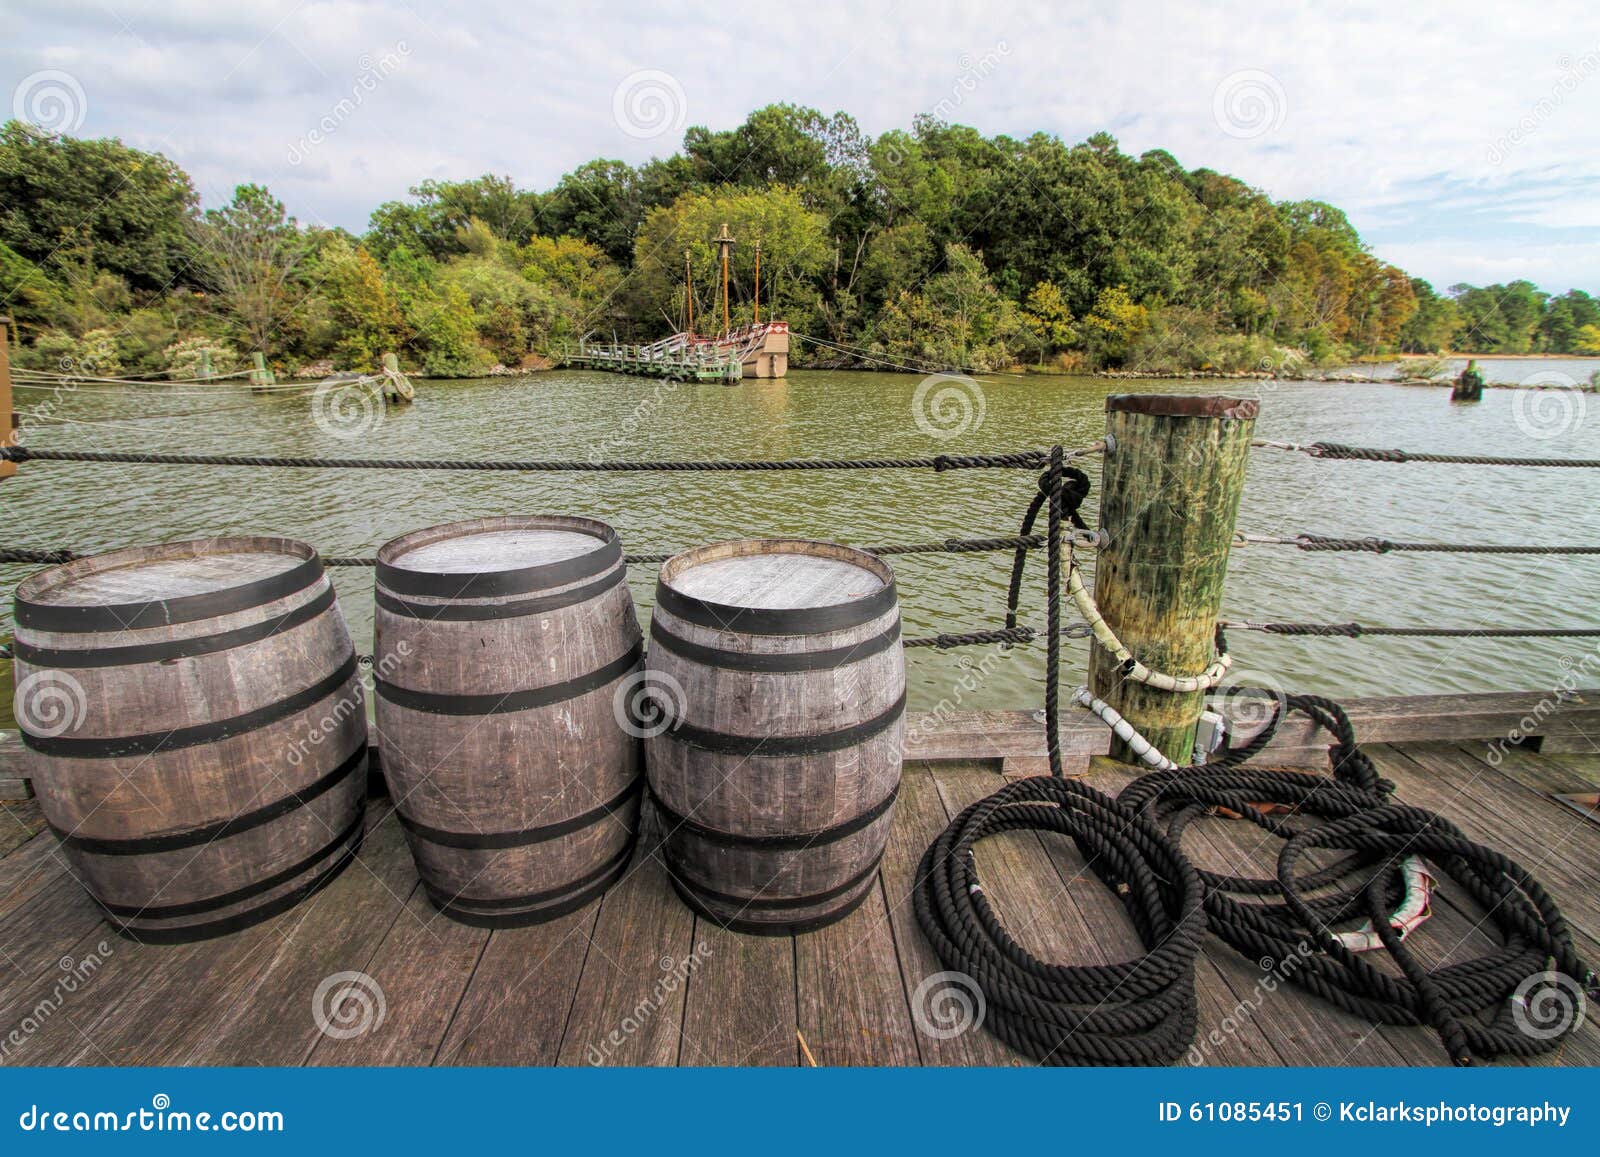 jamestown settlement dock and whiskey barrels